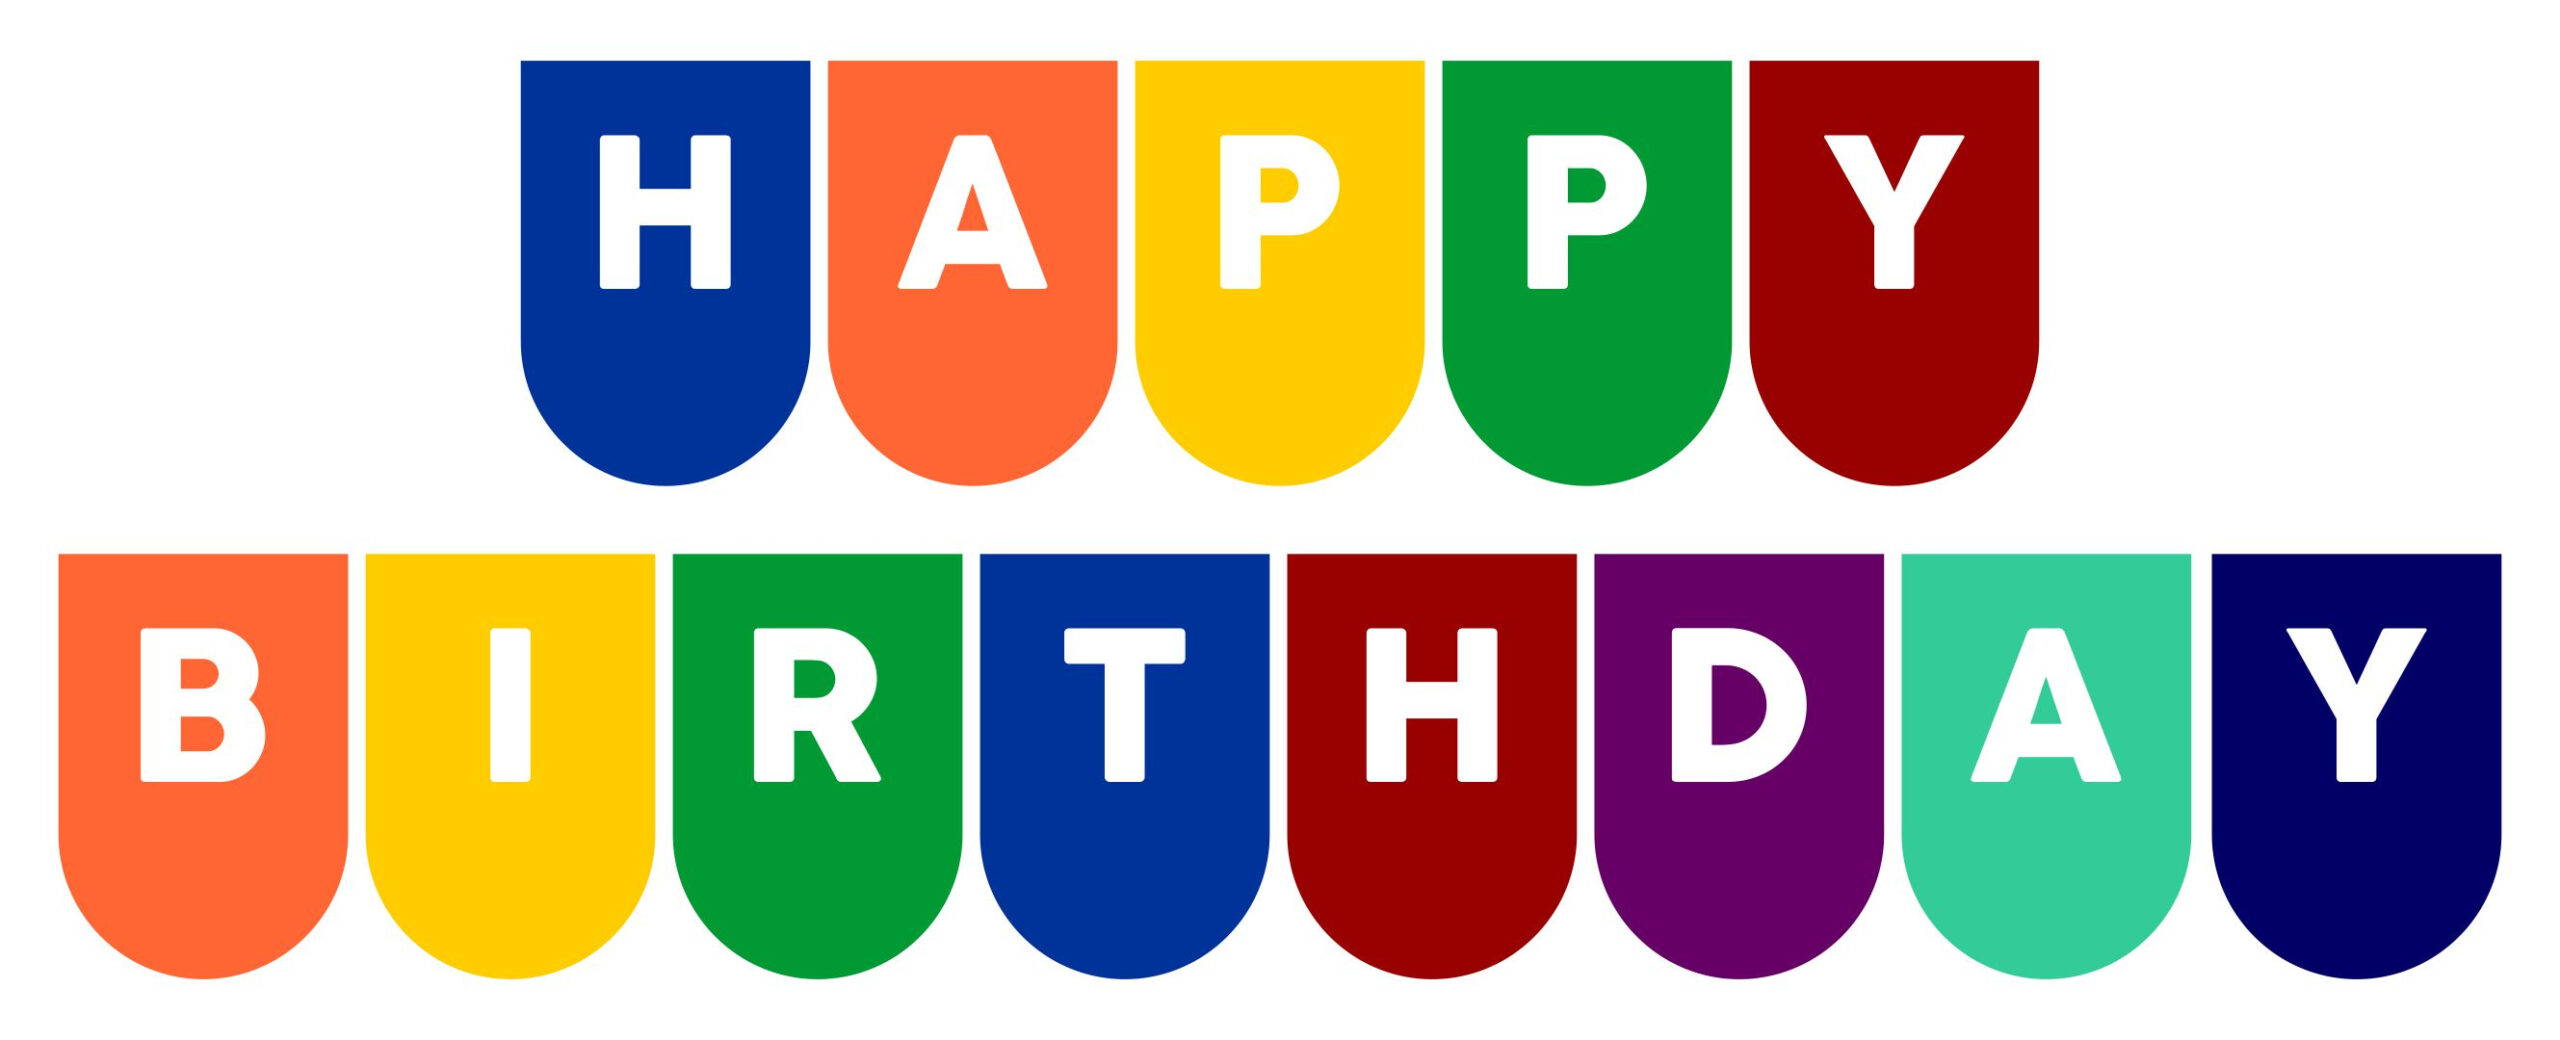 Free Printable Happy Birthday Banner 97,000+ Vectors, Stock Photos within Free Printable Happy Birthday Signs